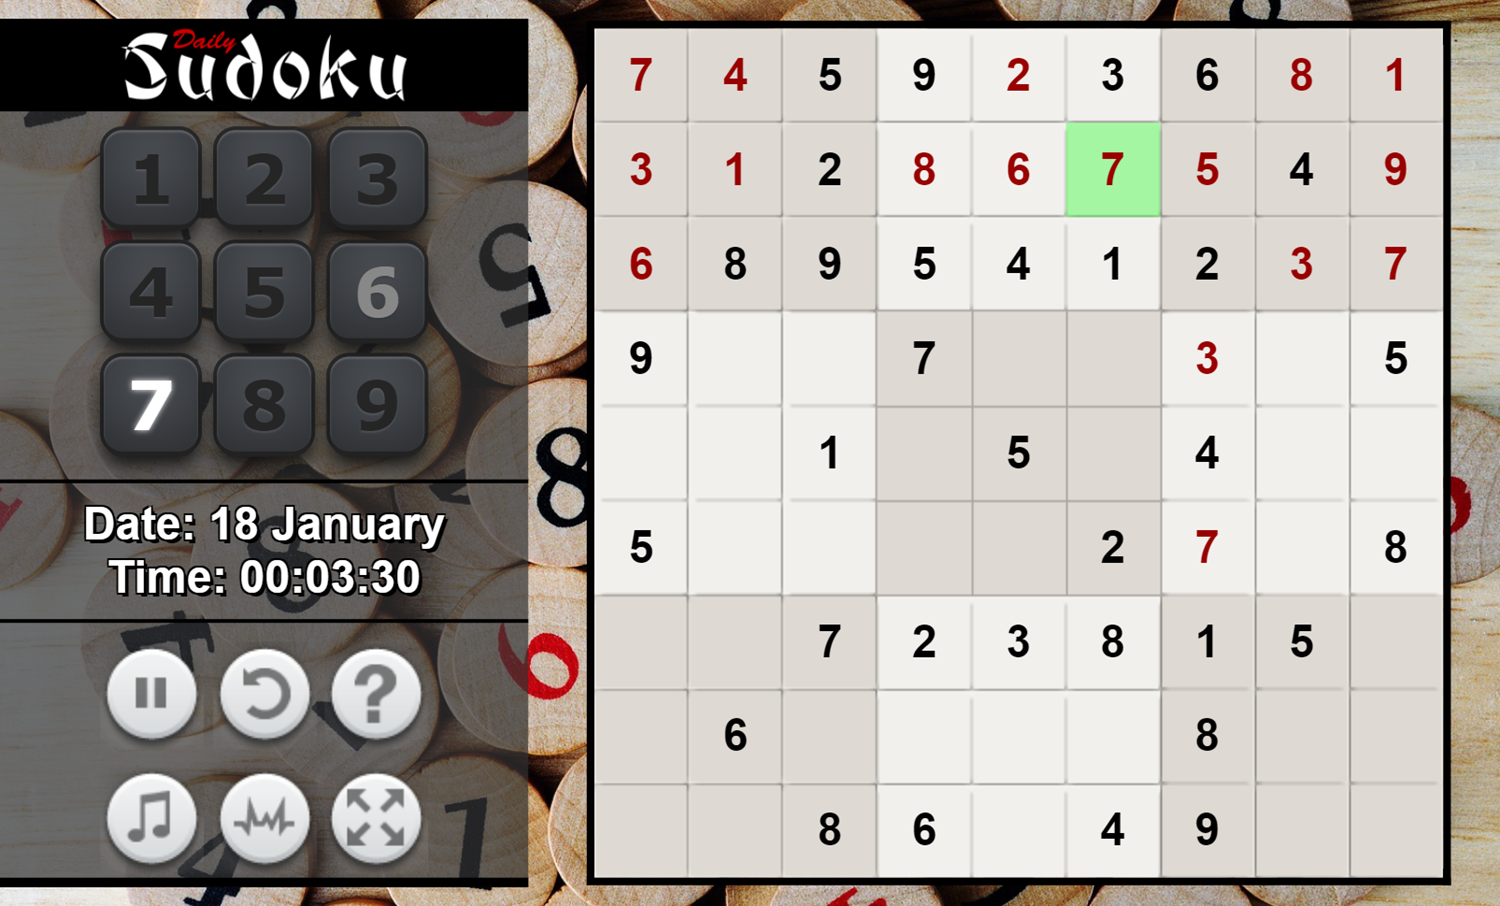 Daily Sudoku Game Solving Puzzle Screenshot.